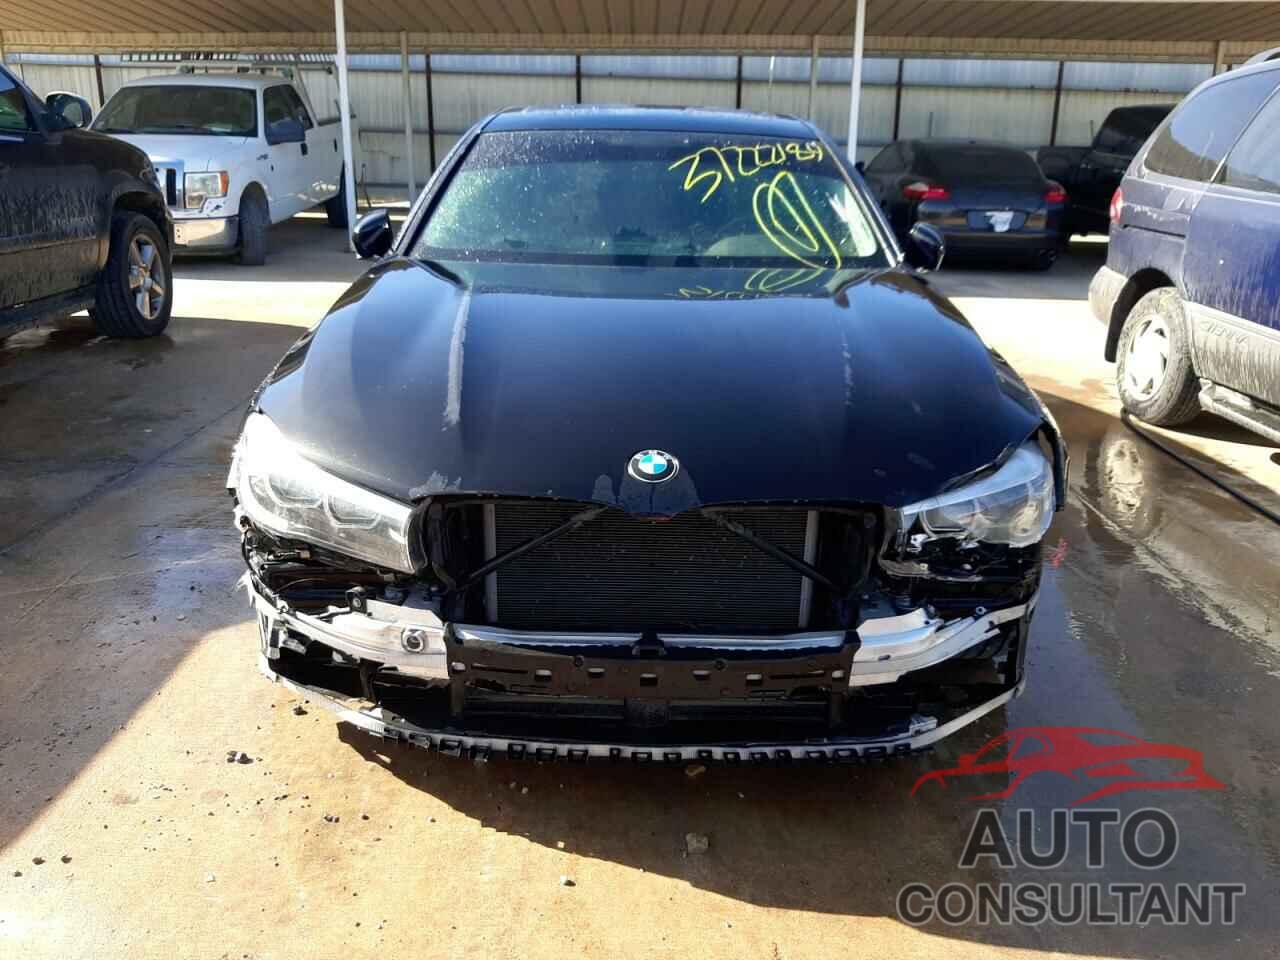 BMW 7 SERIES 2017 - WBA7E2C58HG740401